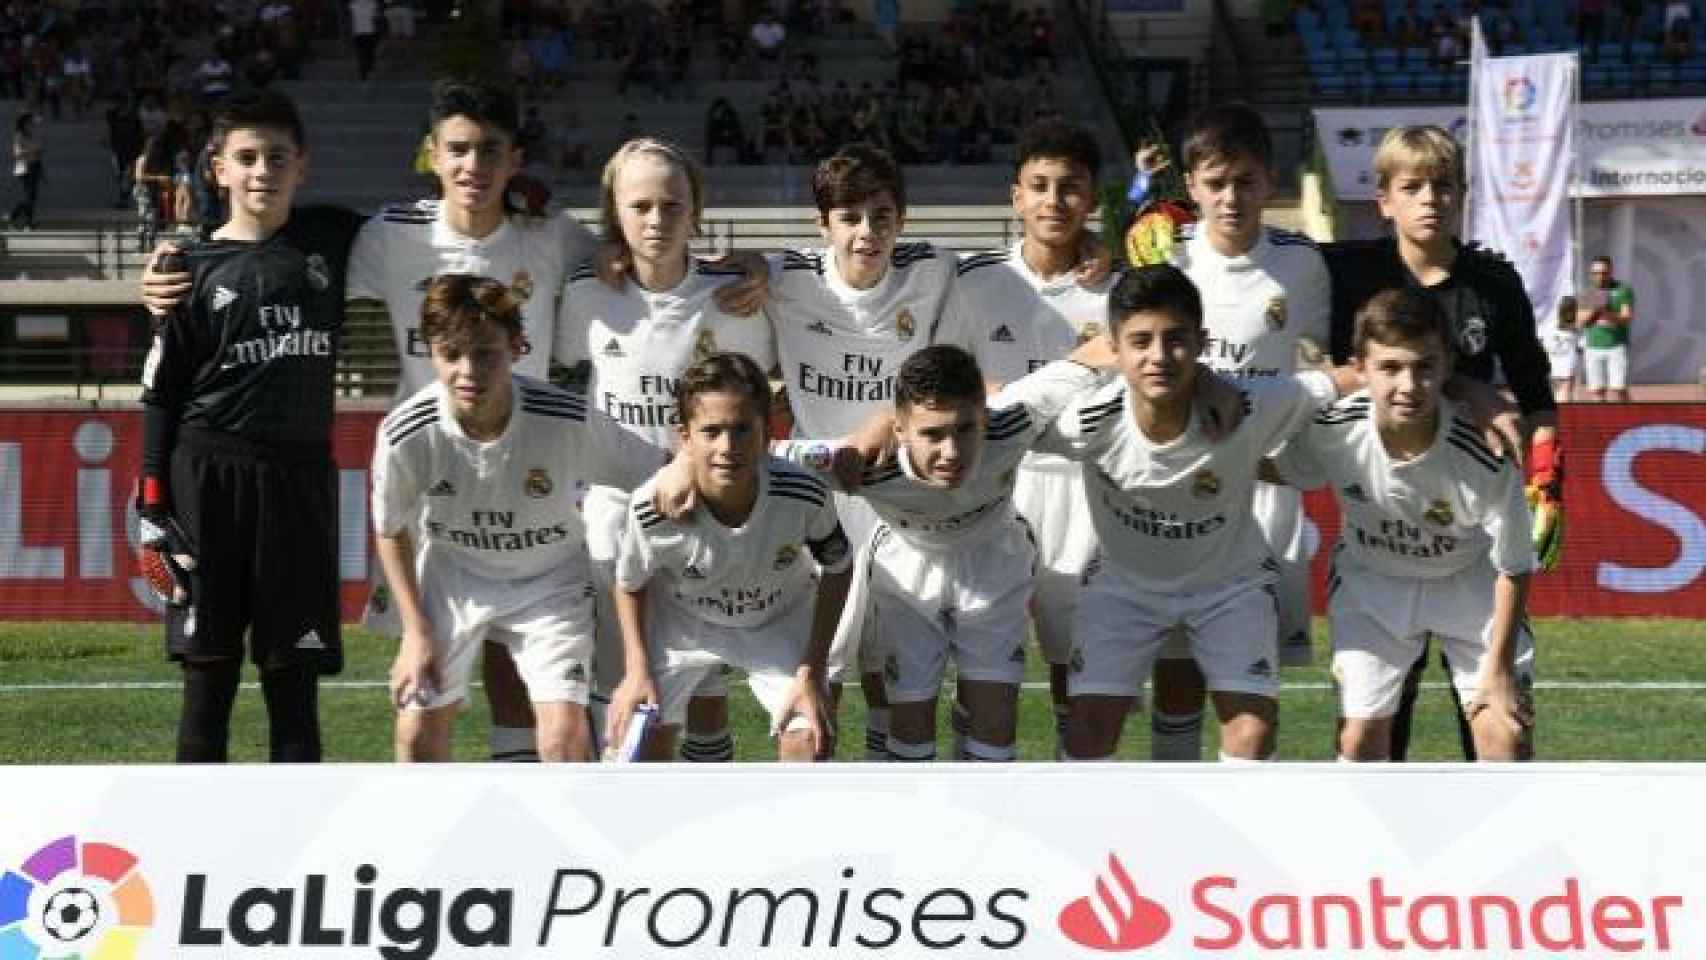 Infantil B del Real Madrid en LaLiga Promises. Foto: laliga.es